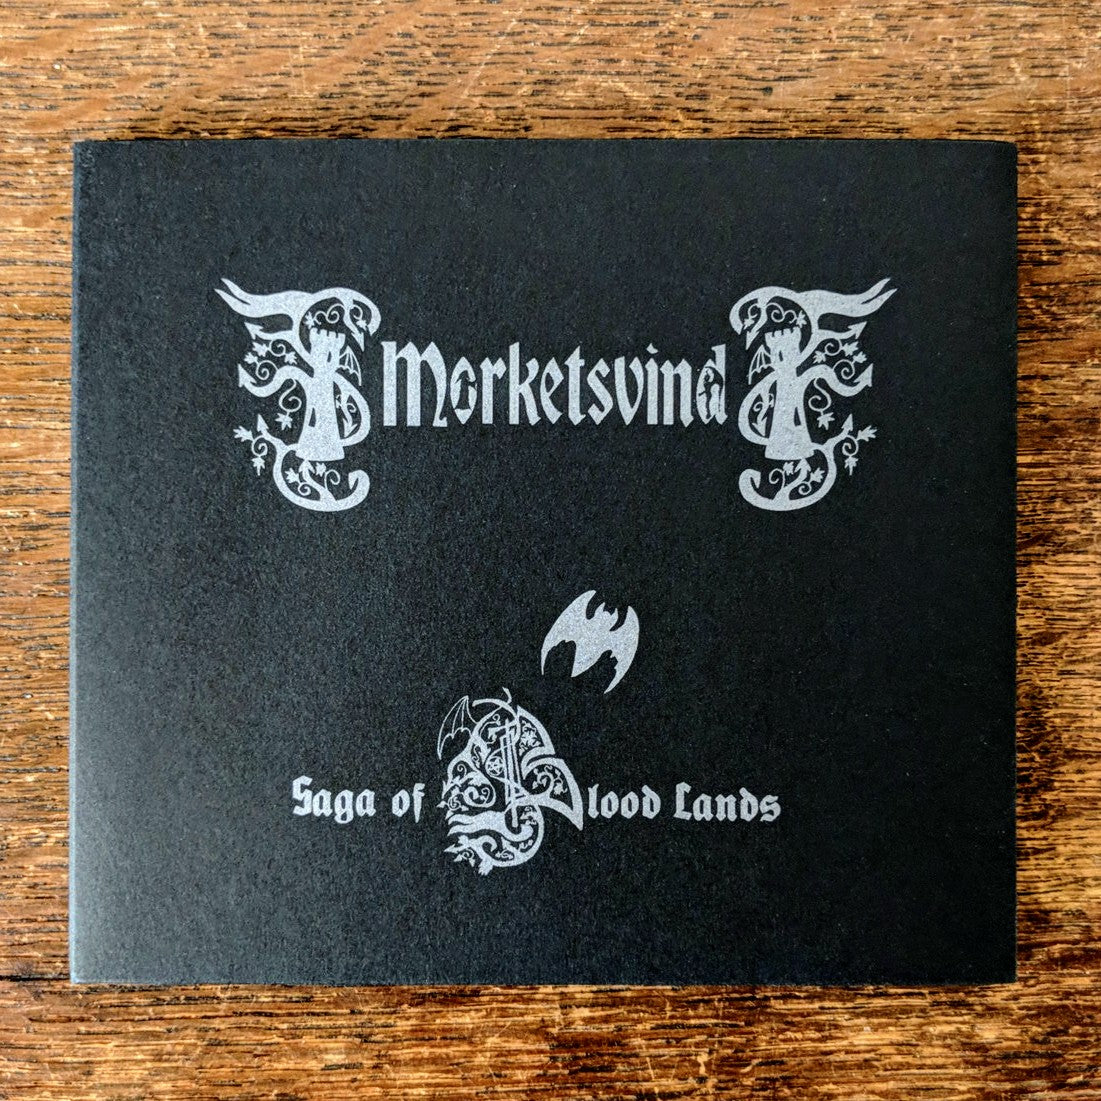 [SOLD OUT] MORKETSVIND "Saga of Blood Lands" CD digipak